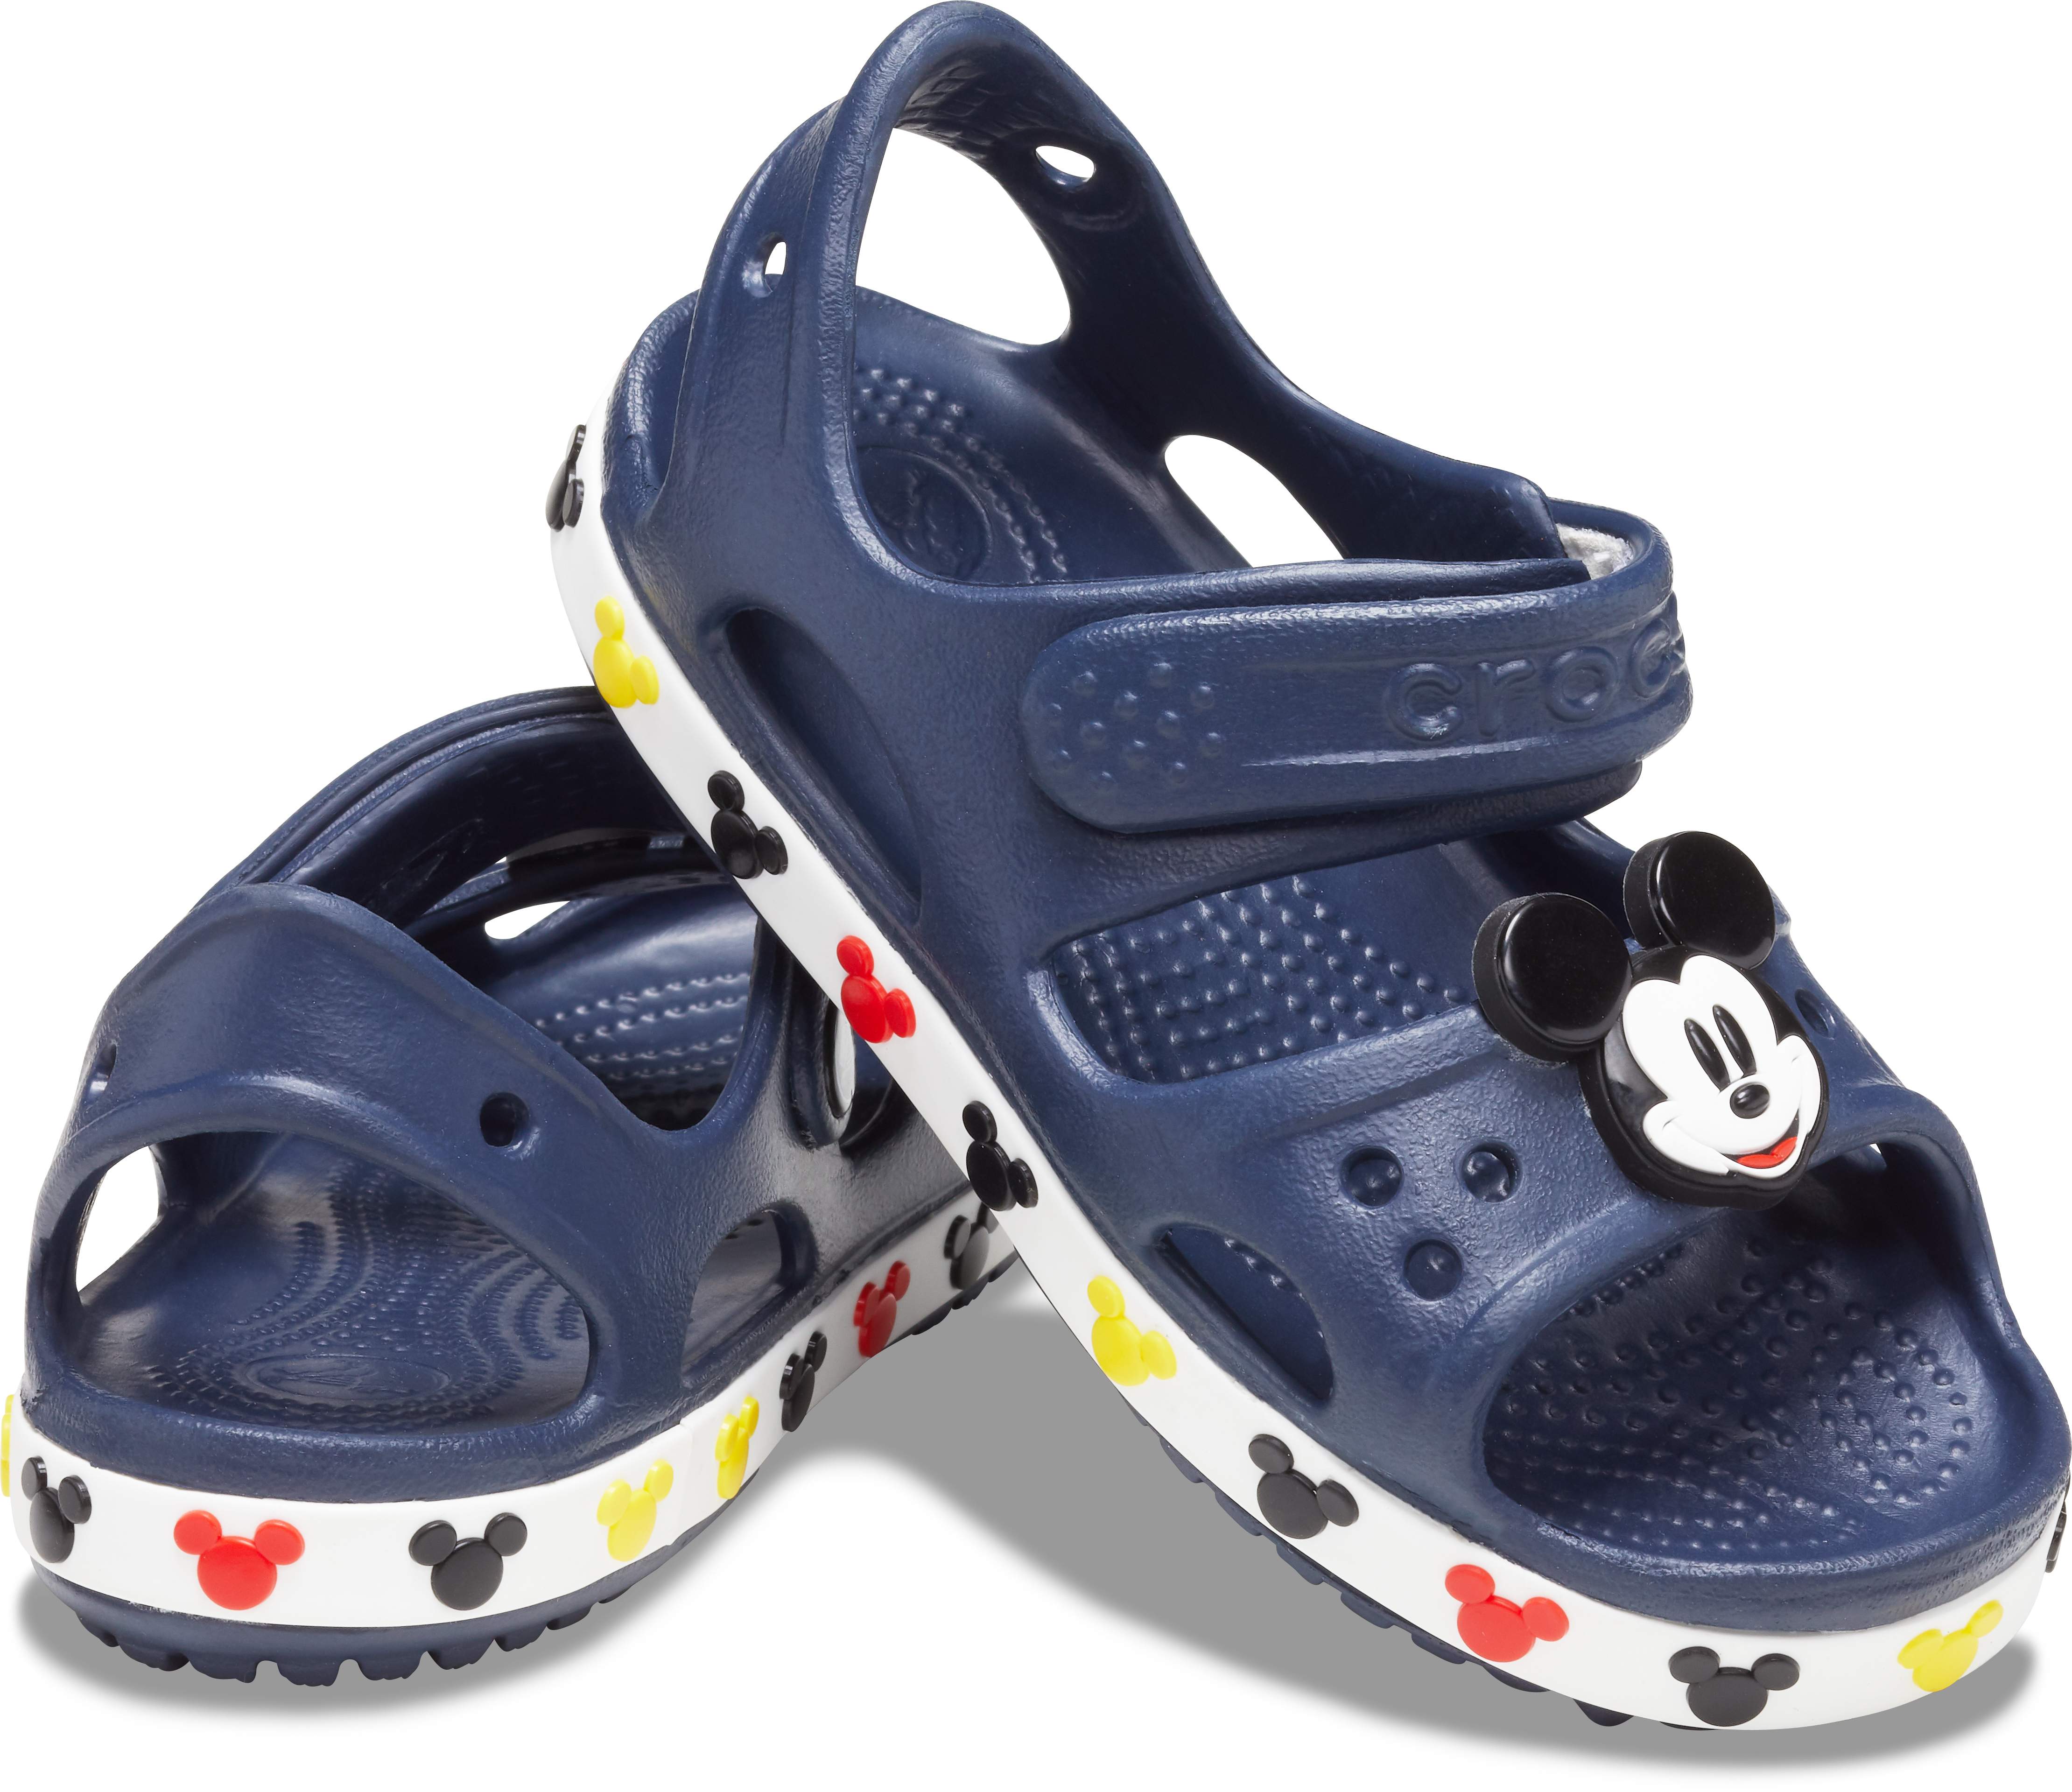 crocs crocband children's sandals